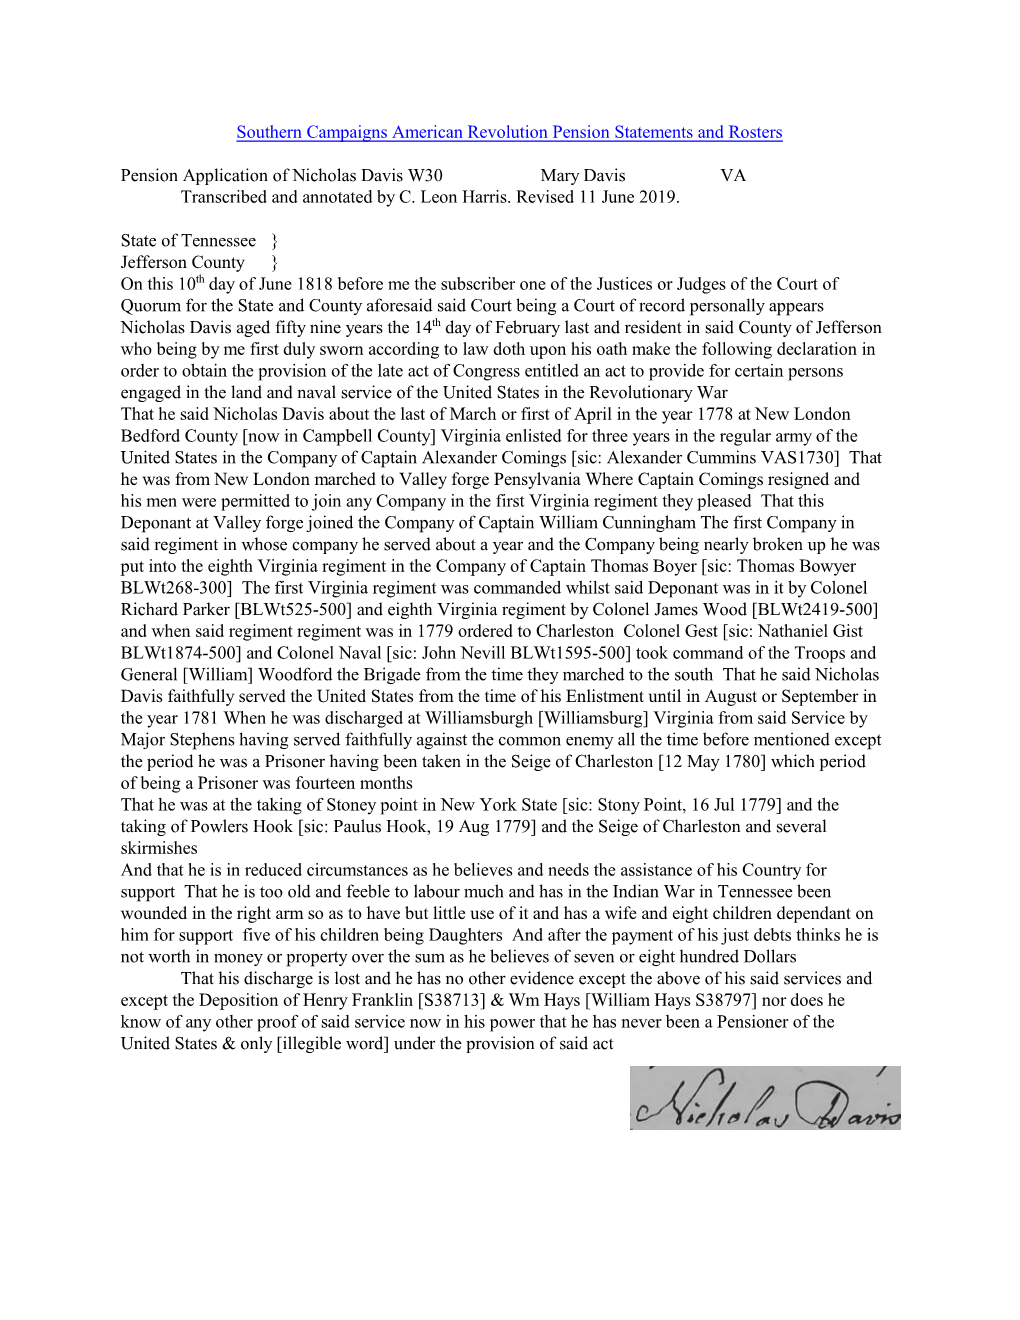 Nicholas Davis W30 Mary Davis VA Transcribed and Annotated by C